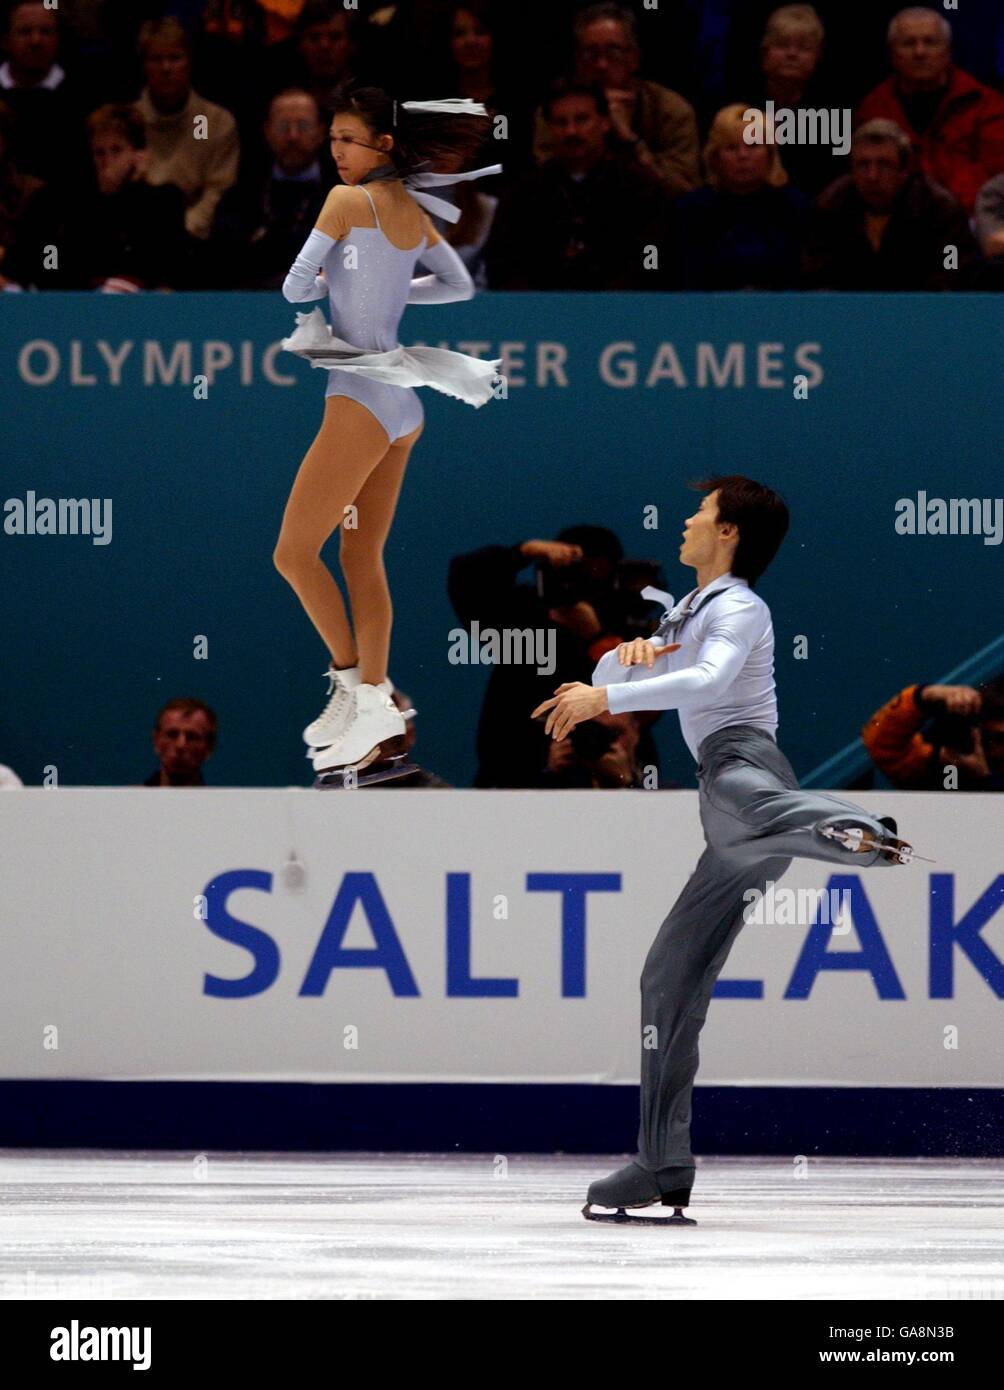 Winter Olympics - Salt Lake City 2002 - Figure Skating - Pairs Free Programme. China's Qing Pang and partner Jian Tong in action during the pairs free programme Stock Photo